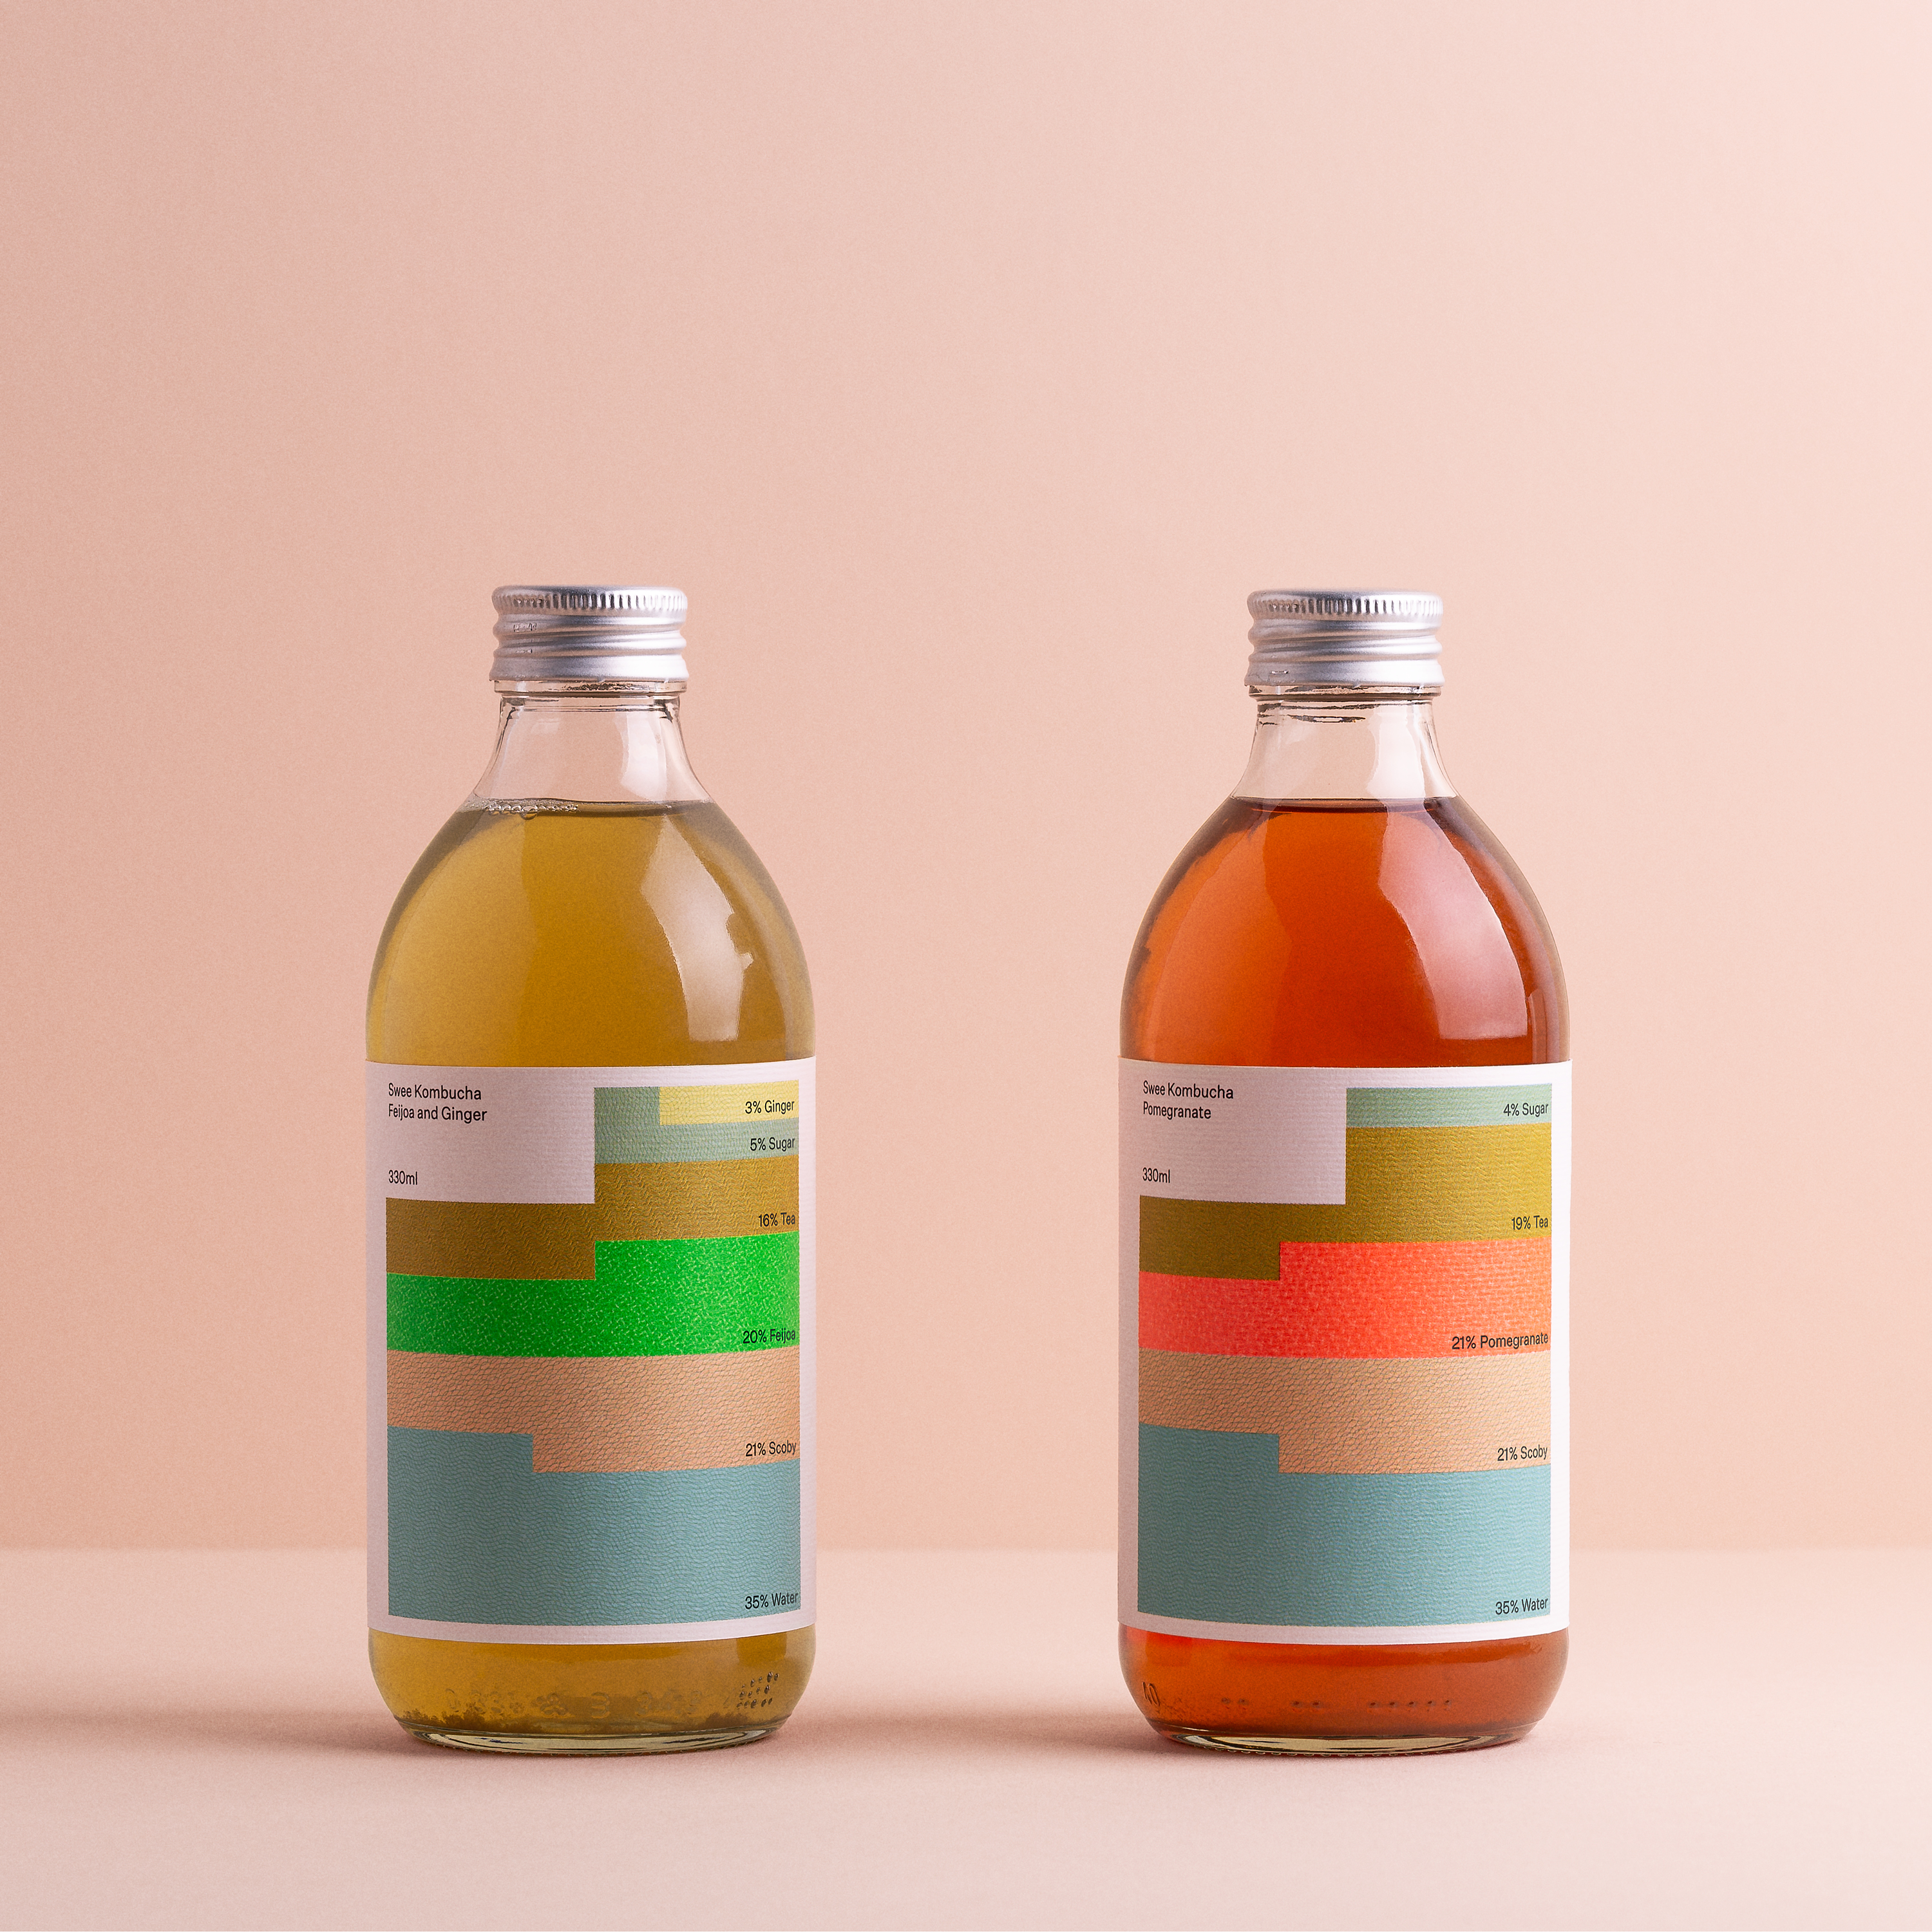 Packaging design by Swedish design studio Bedow for Georgian kombucha brand Swee.